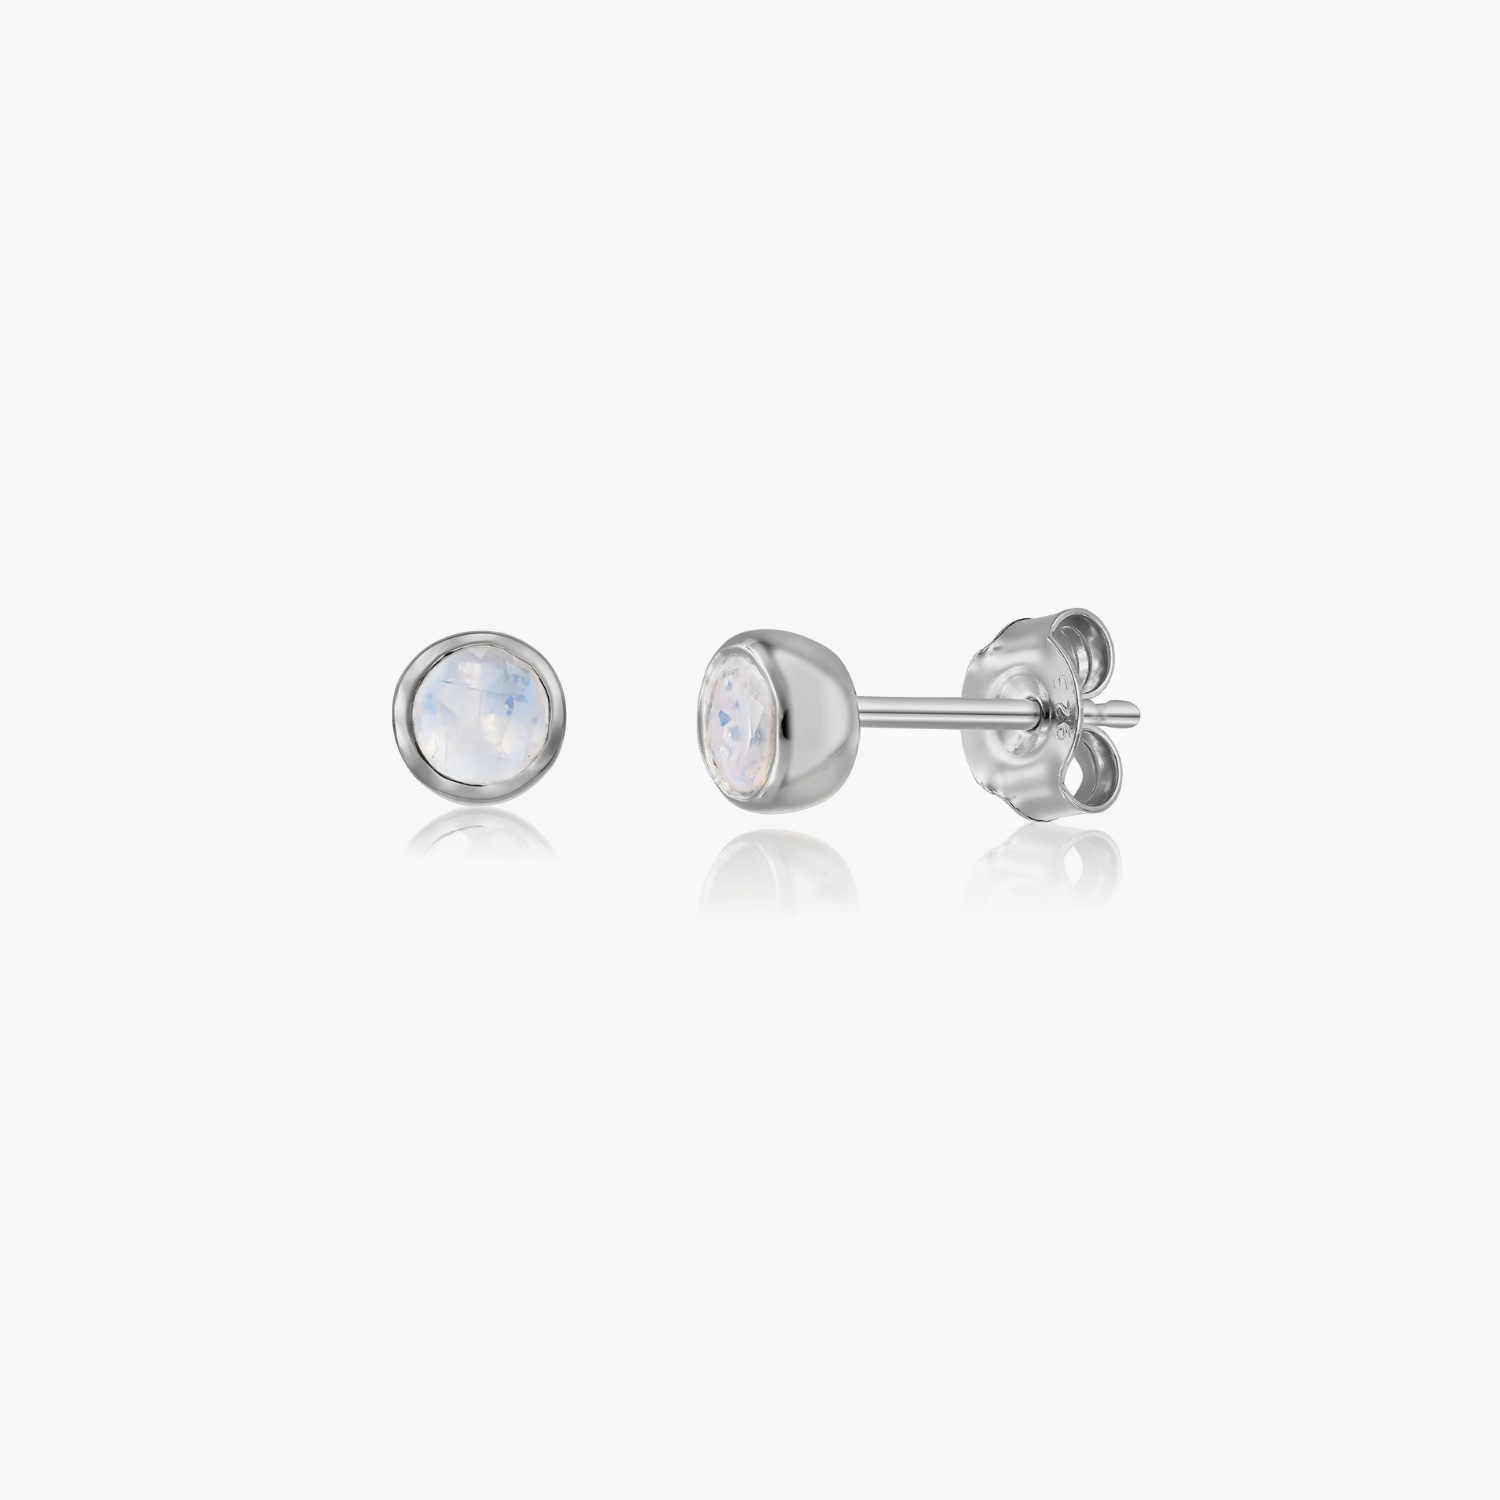 Silver earrings Birthstone June - Stone of the Moon